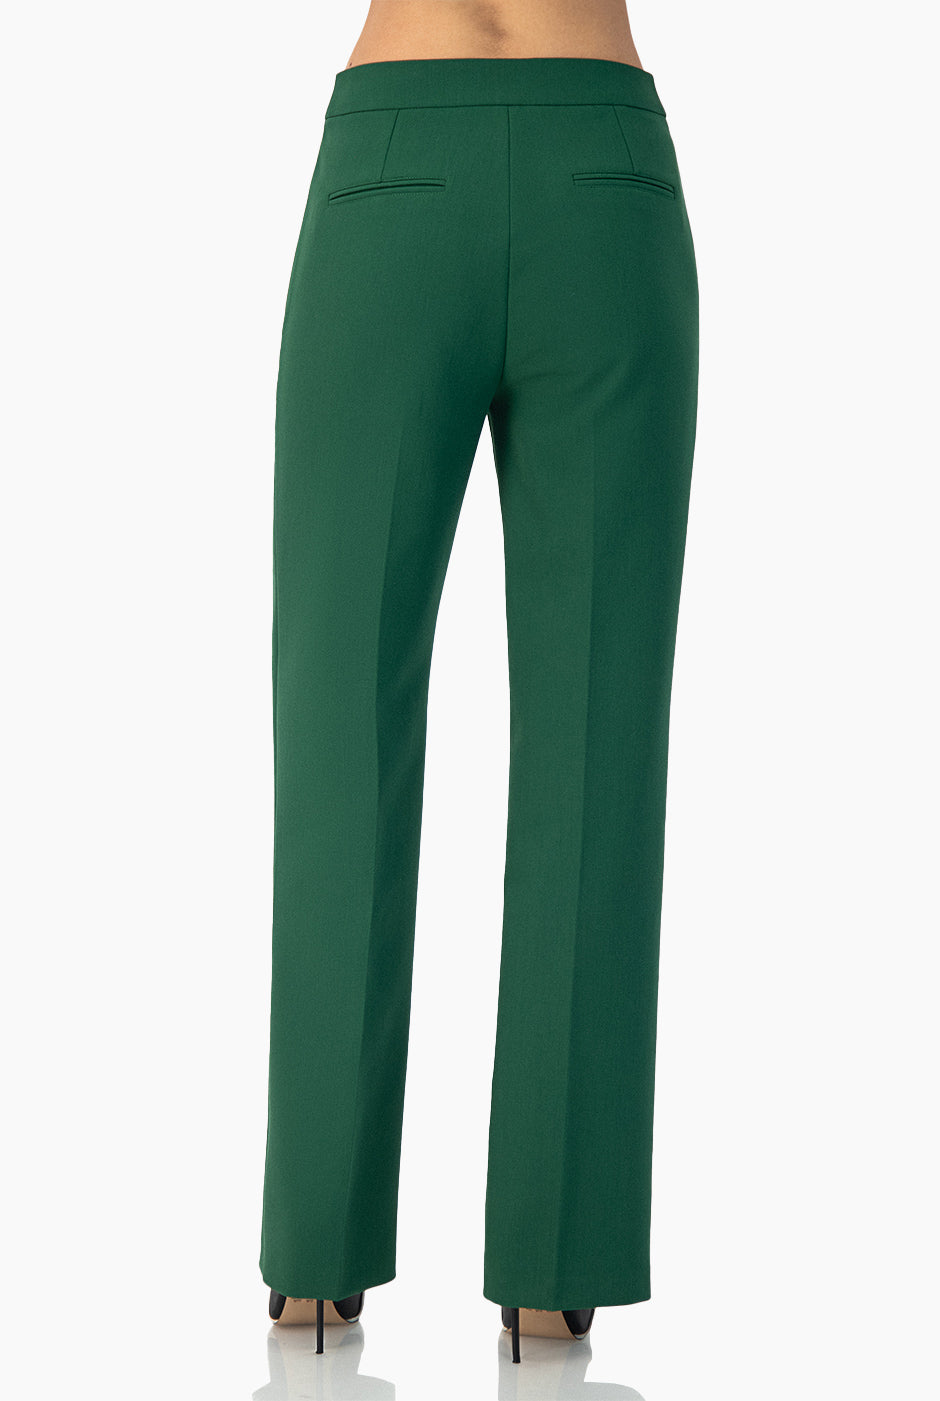 Pantalon recto liso color verde